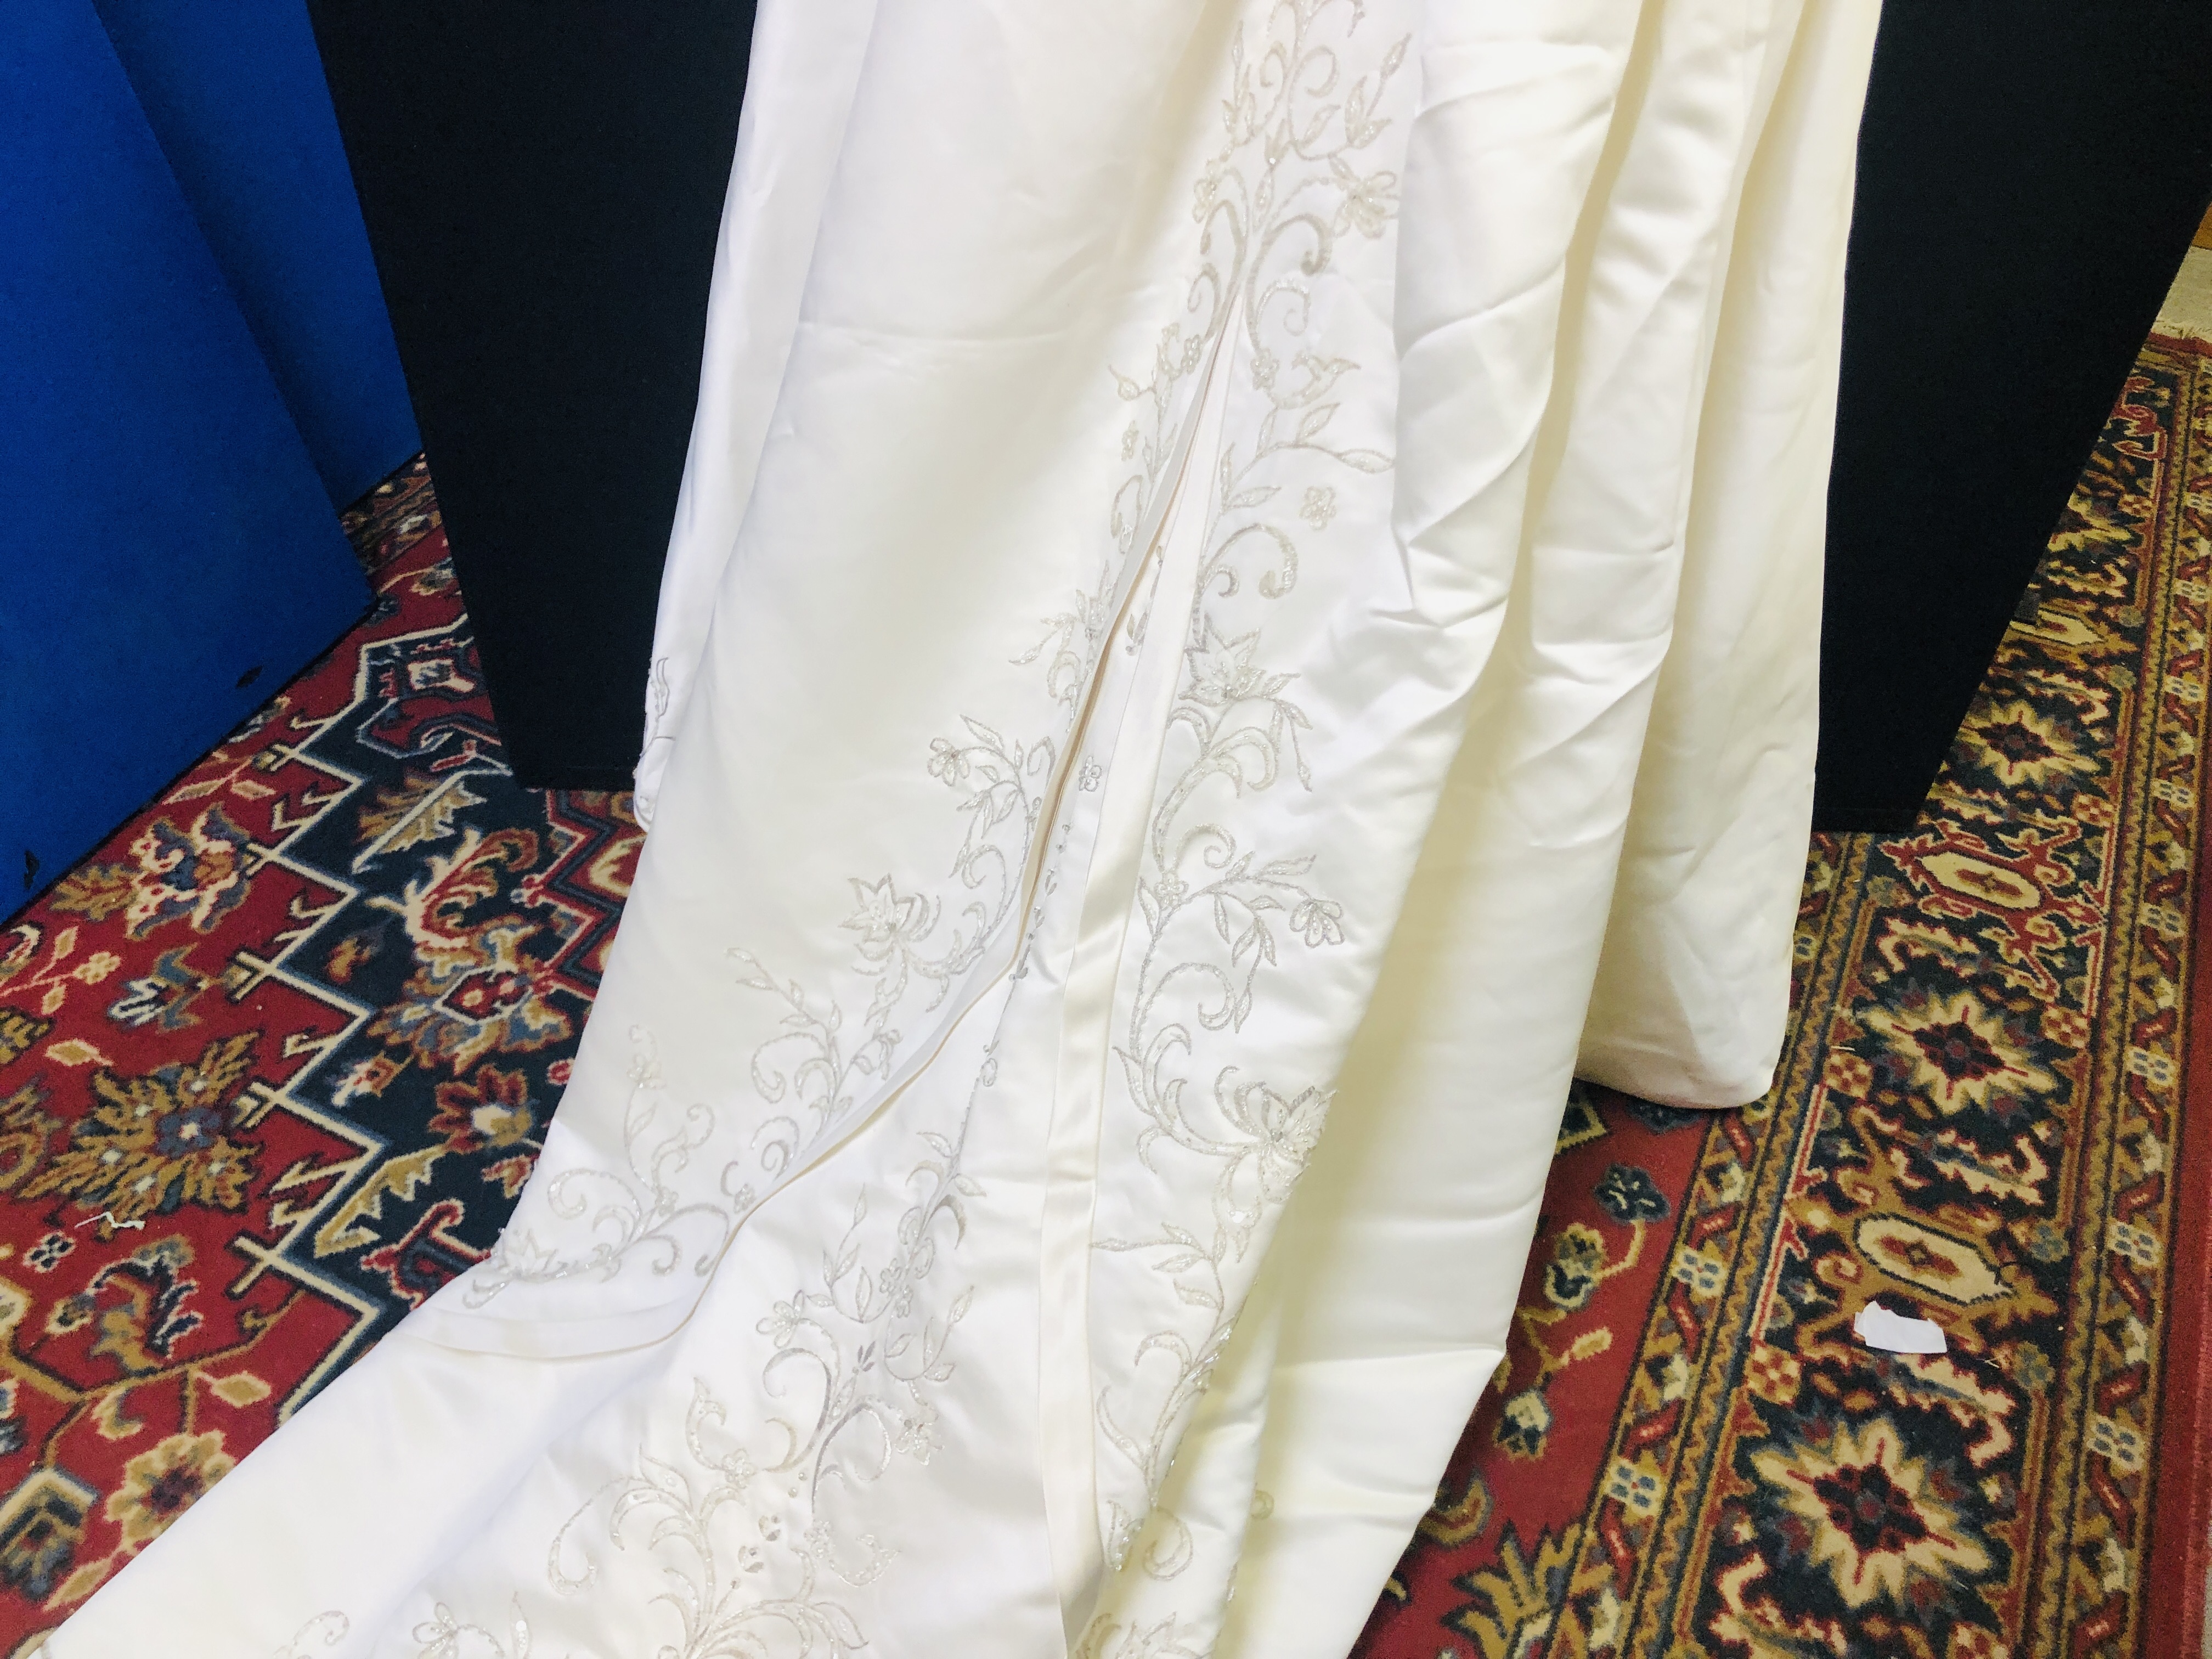 DESIGNER WEDDING DRESS MARKED "TRUDY LEE" SIZE 26. - Image 8 of 9